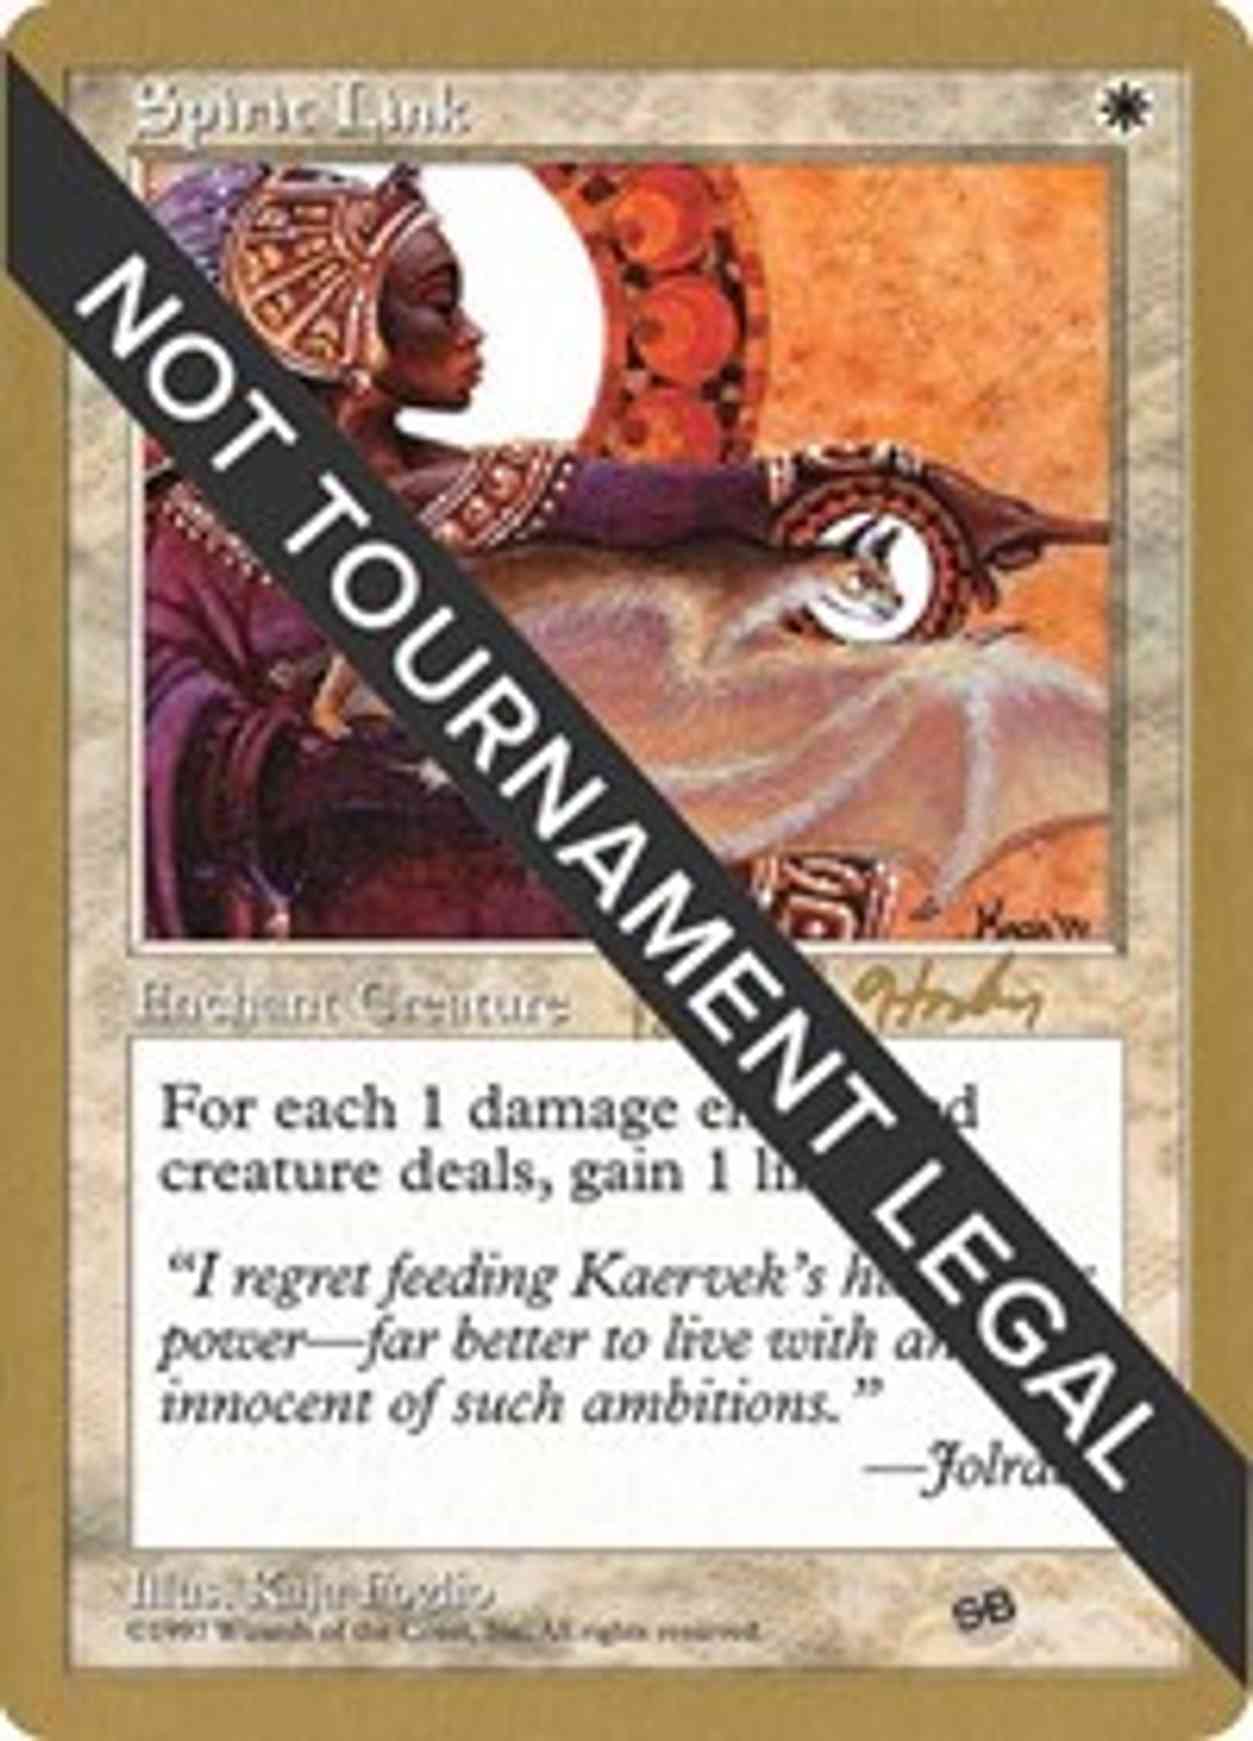 Spirit Link - 1998 Brian Selden (5ED) (SB) magic card front